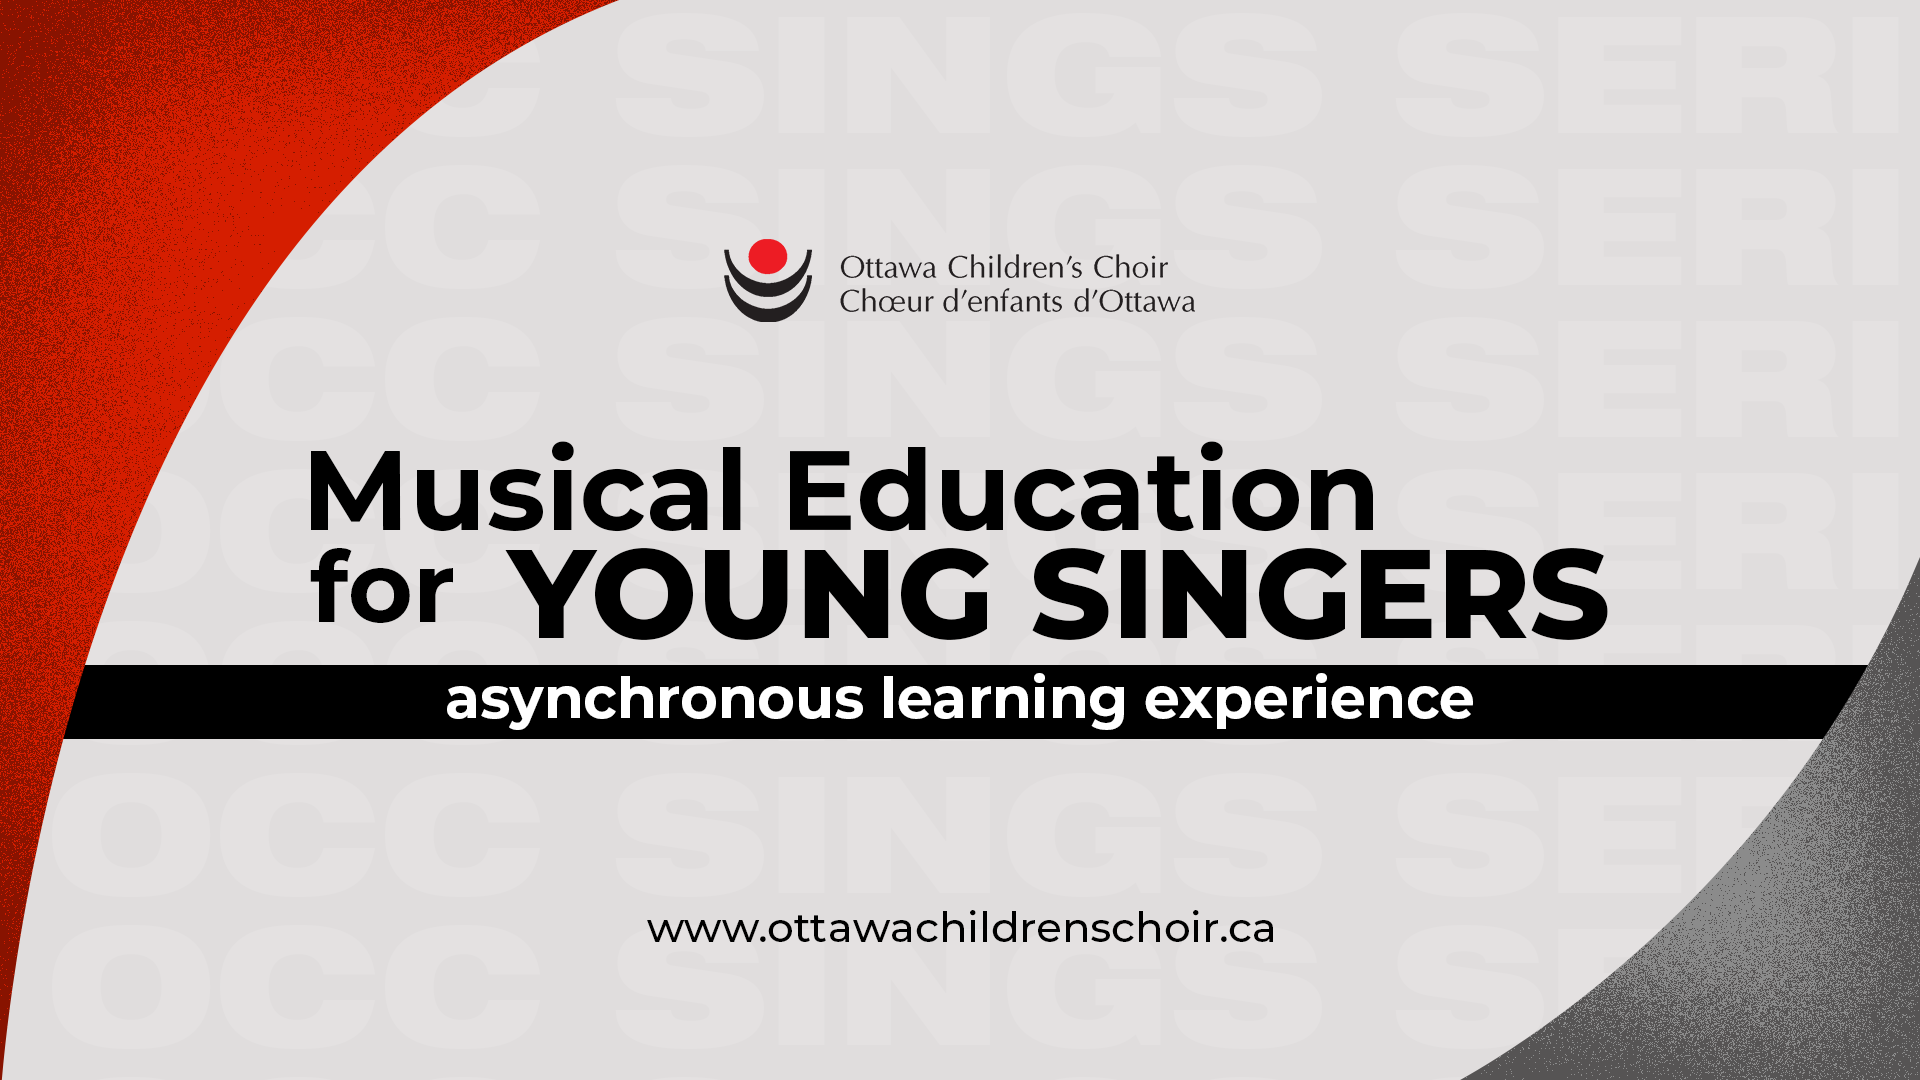 Chœur d'enfants d'Ottawa - « Musical Education for Young Singers »